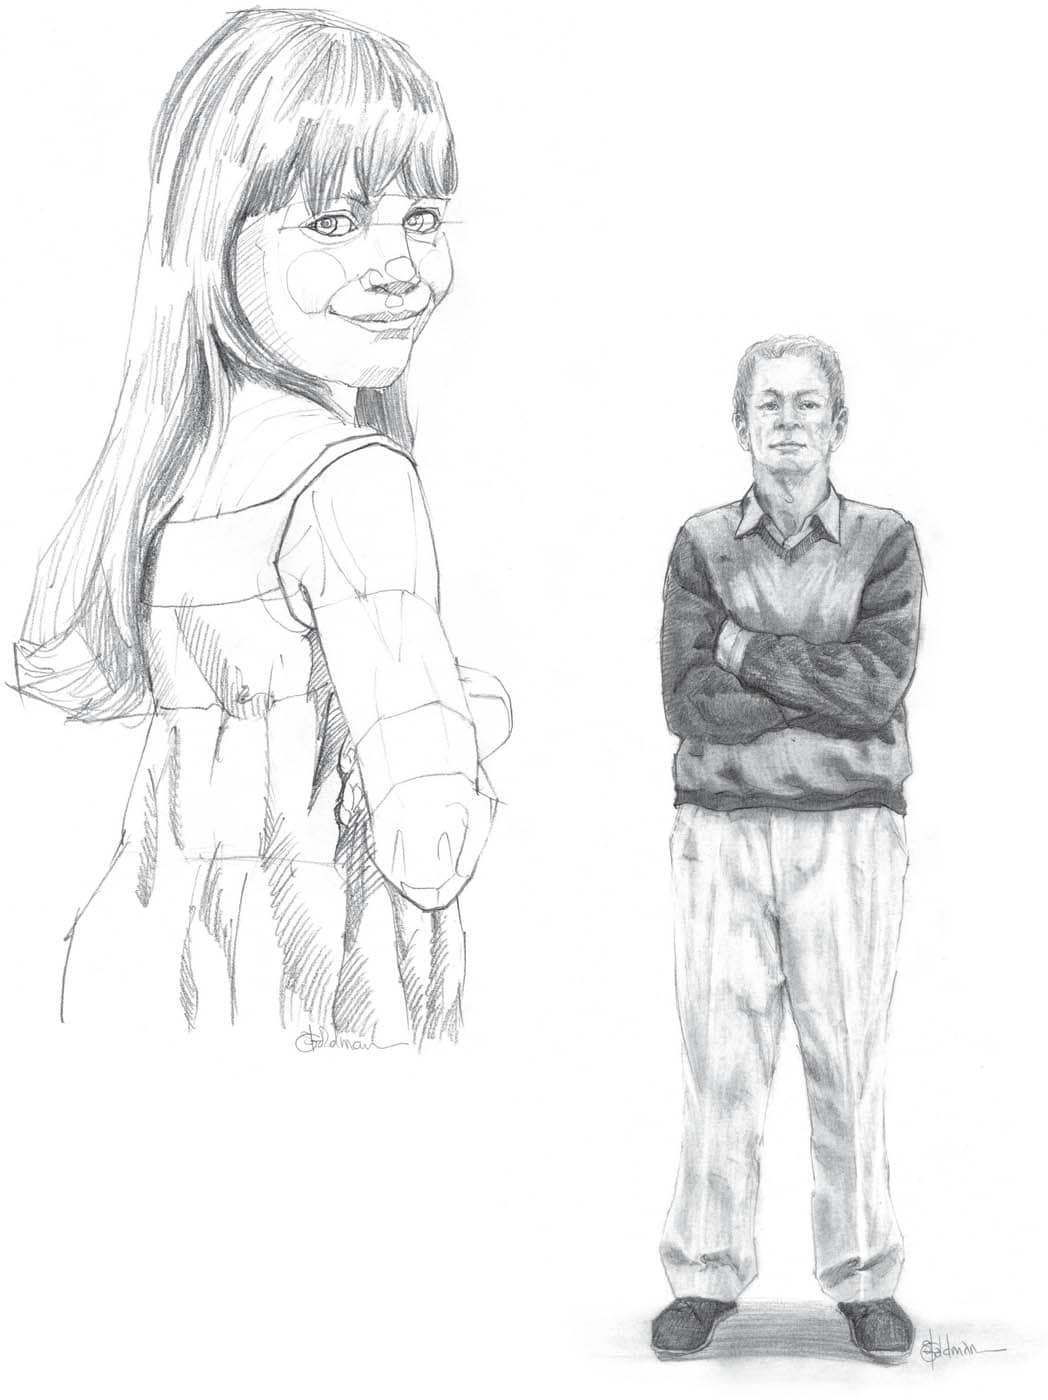 running figure | Figure drawing, Human figure sketches, Human figure drawing